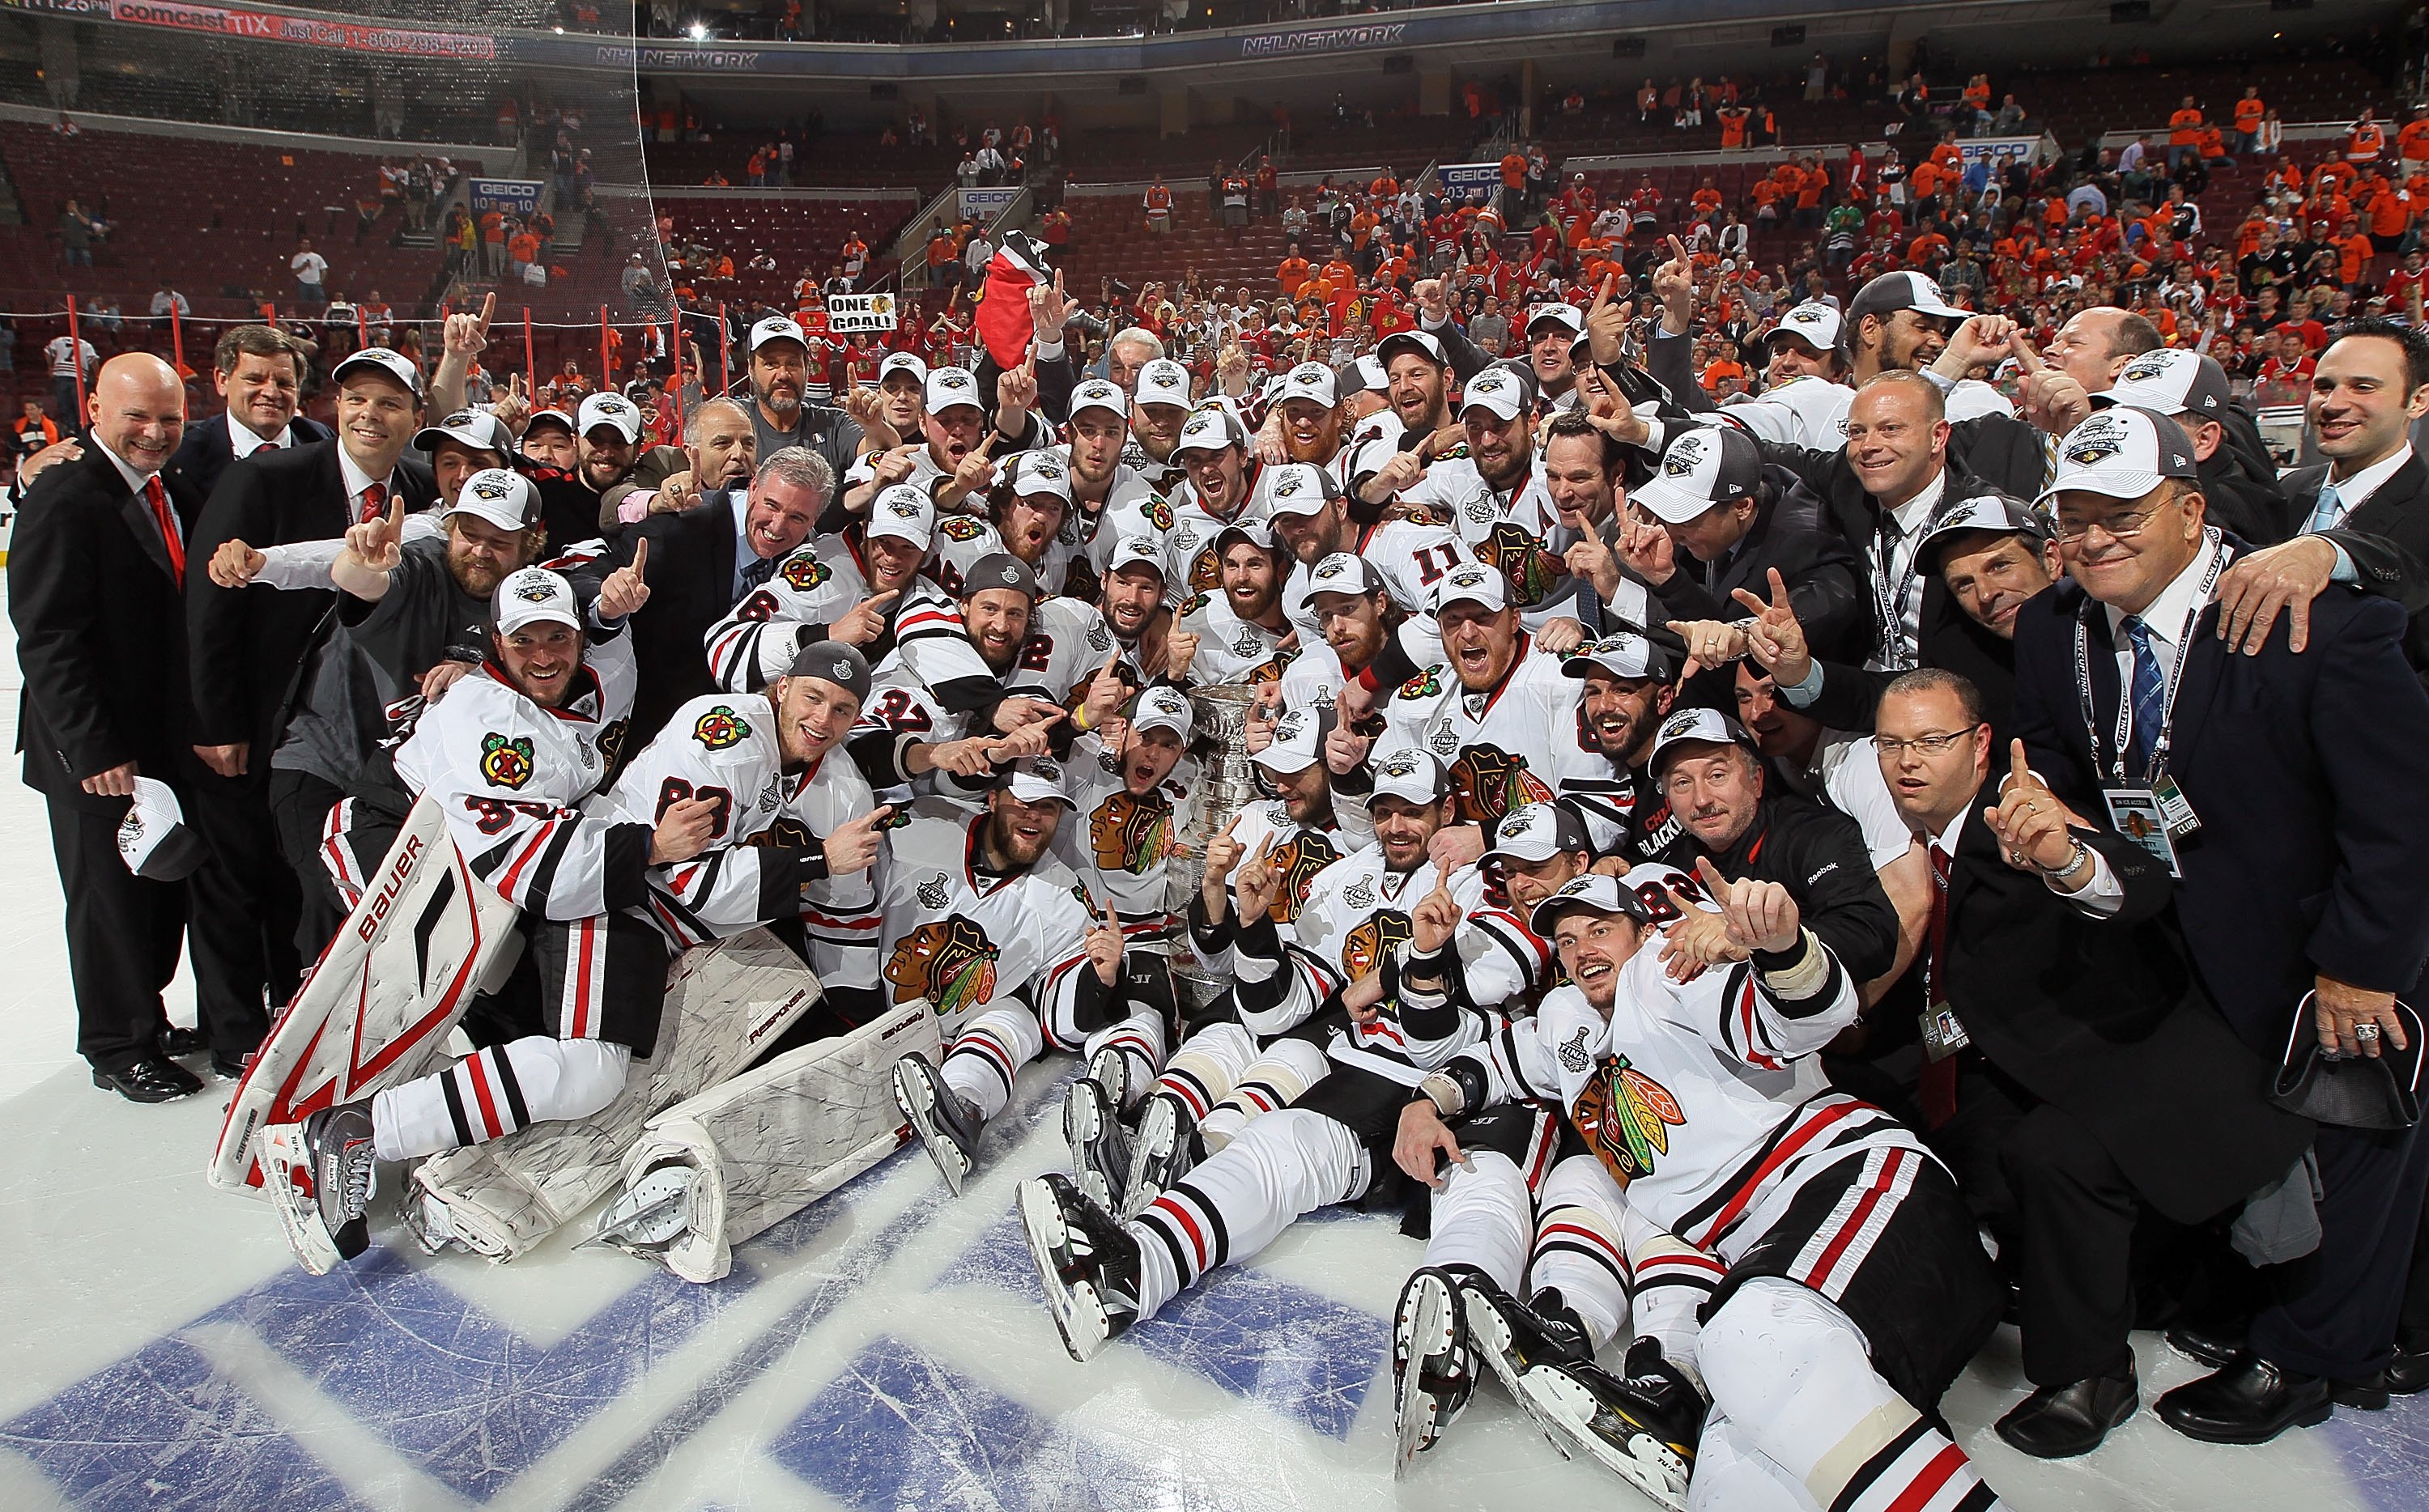 Stanley Cup, NHL, Hockey Teams, Champions